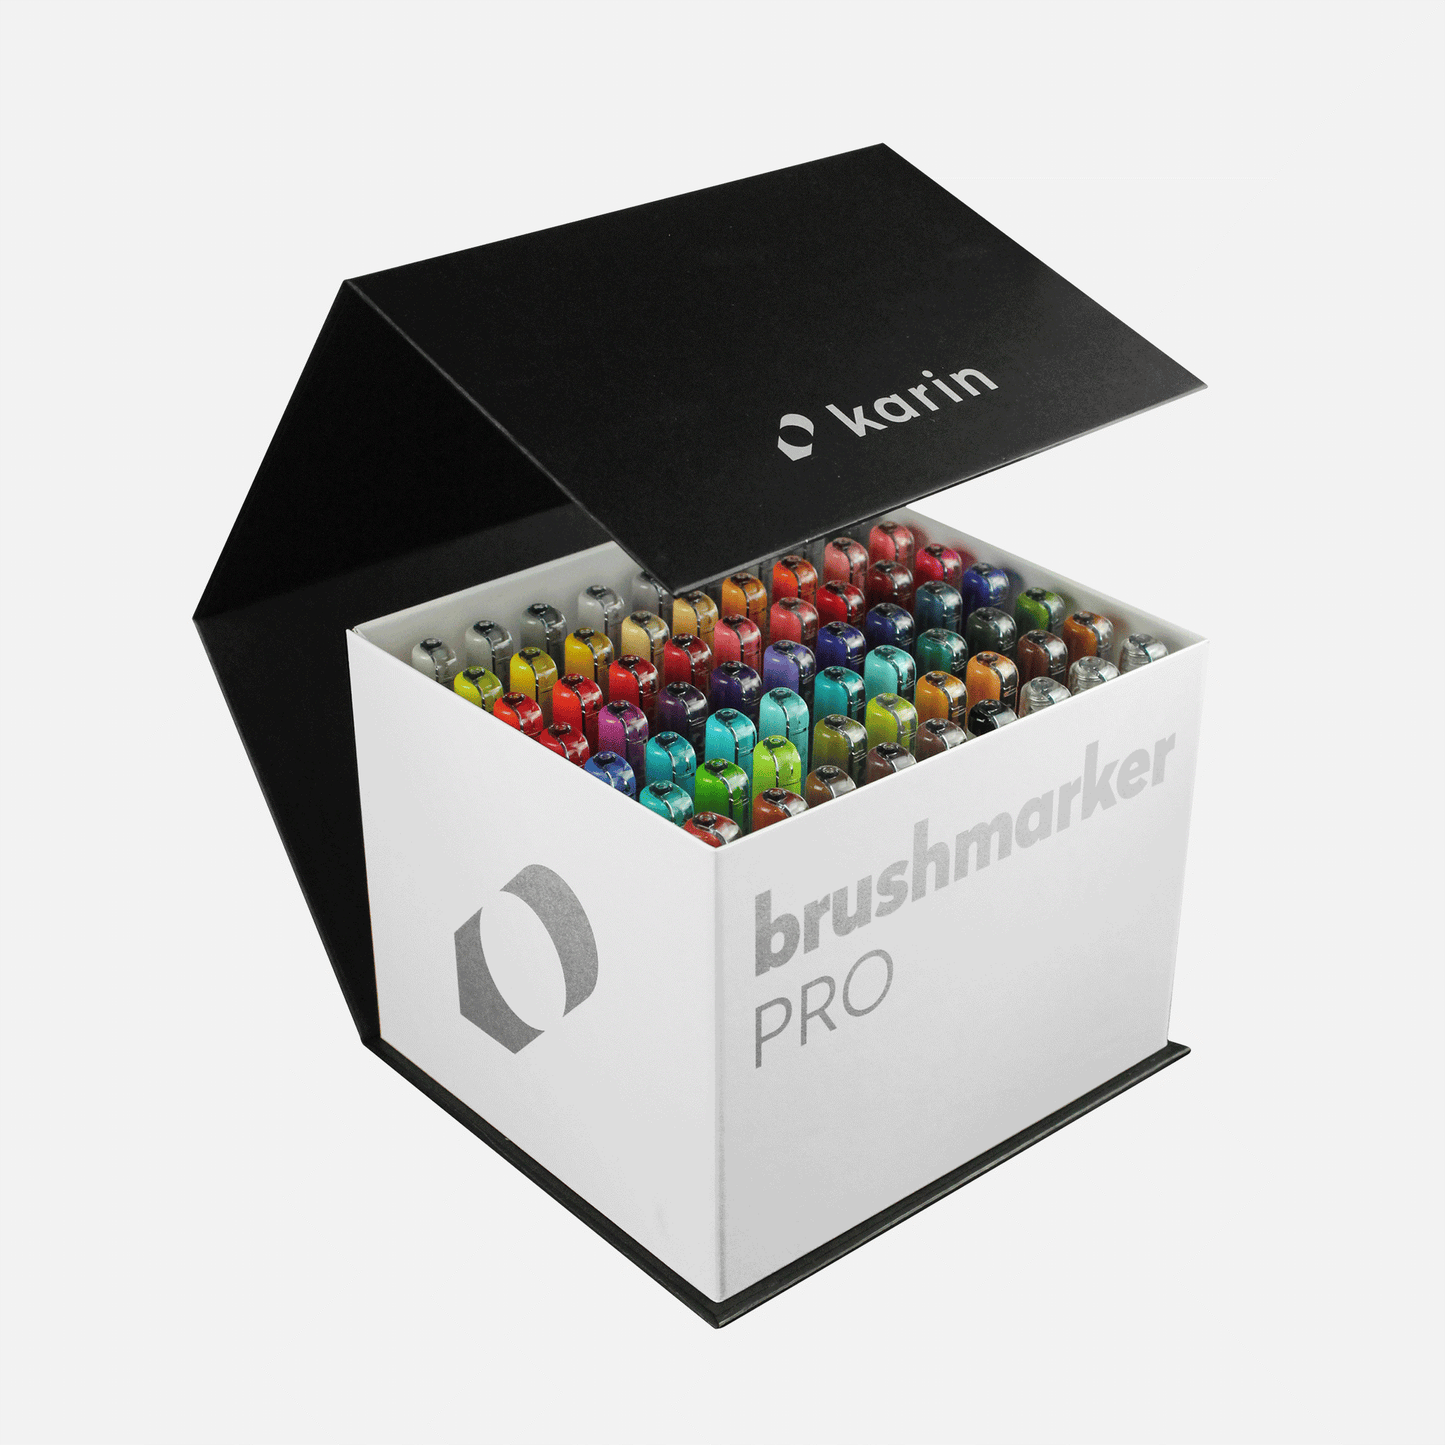 Karin BrushmarkerPRO | MegaBoxPLUS | 72 colours + 3 blenders